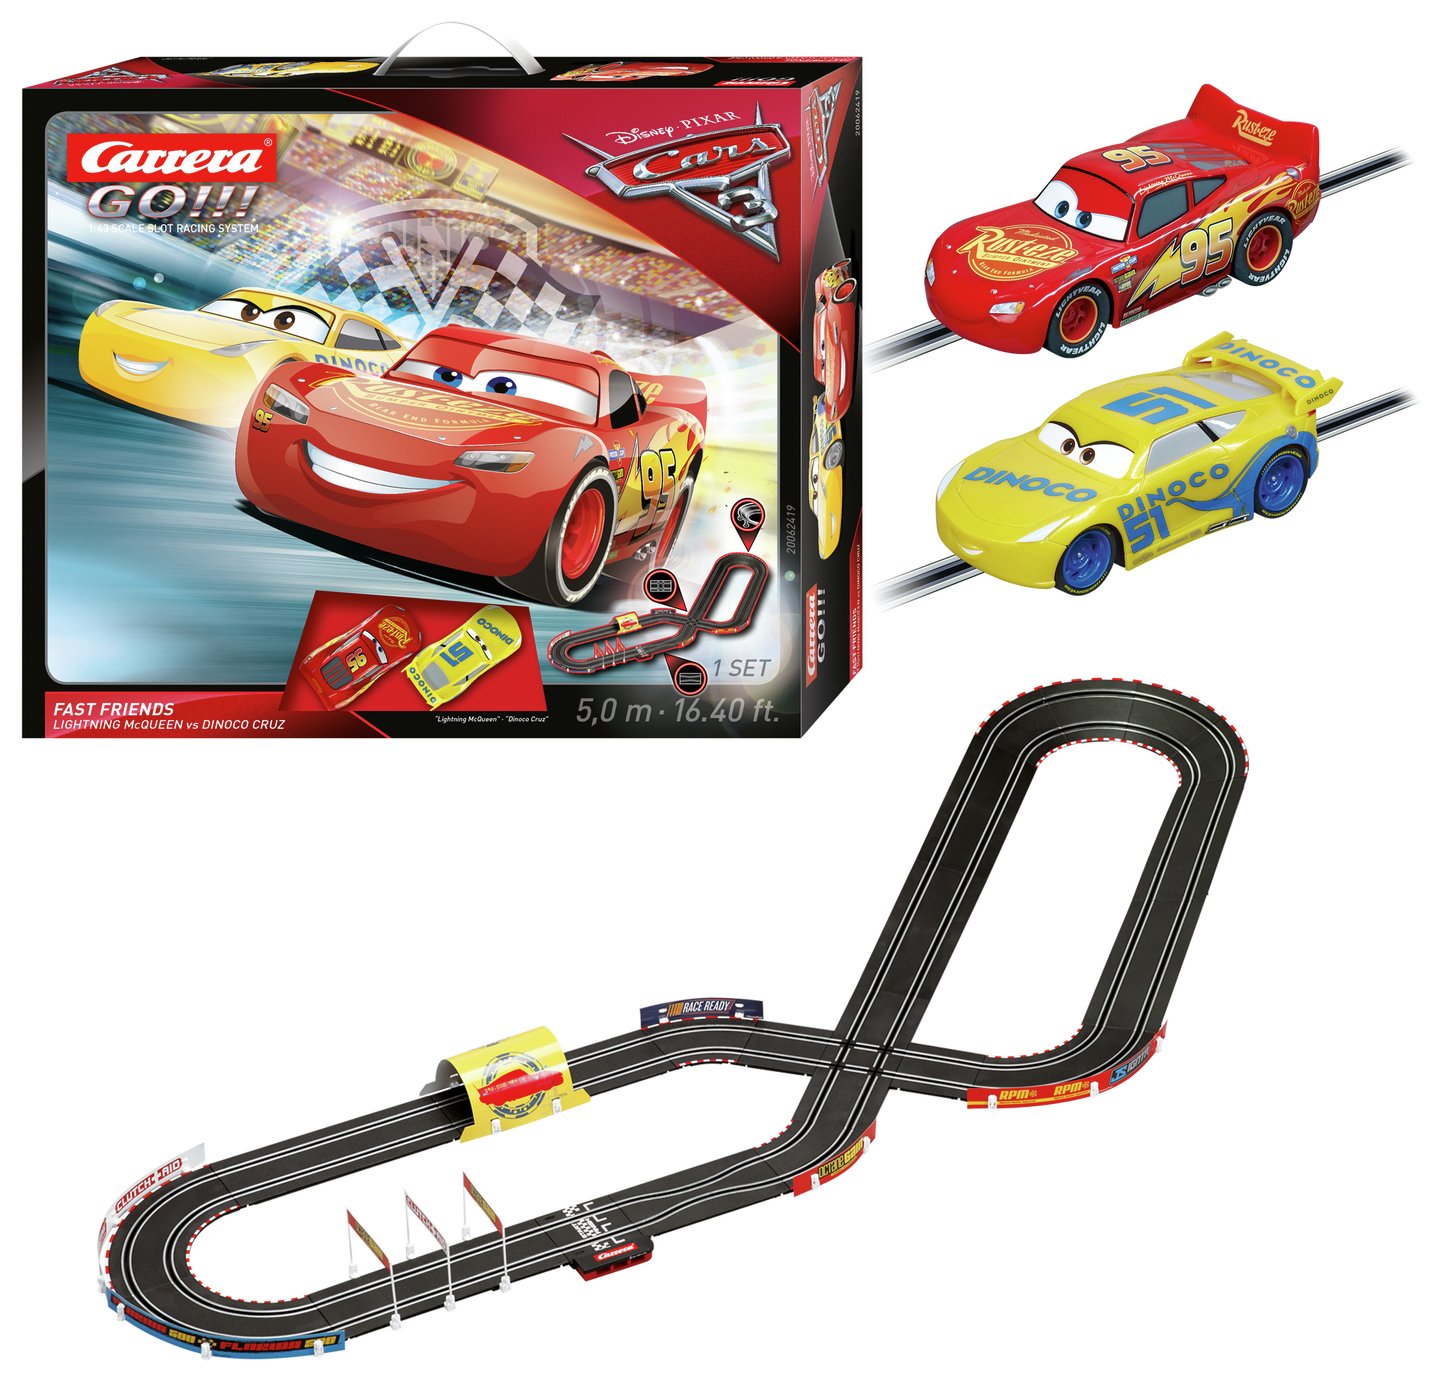 Carrera Go!!! Cars 3 Racing Circuit Set